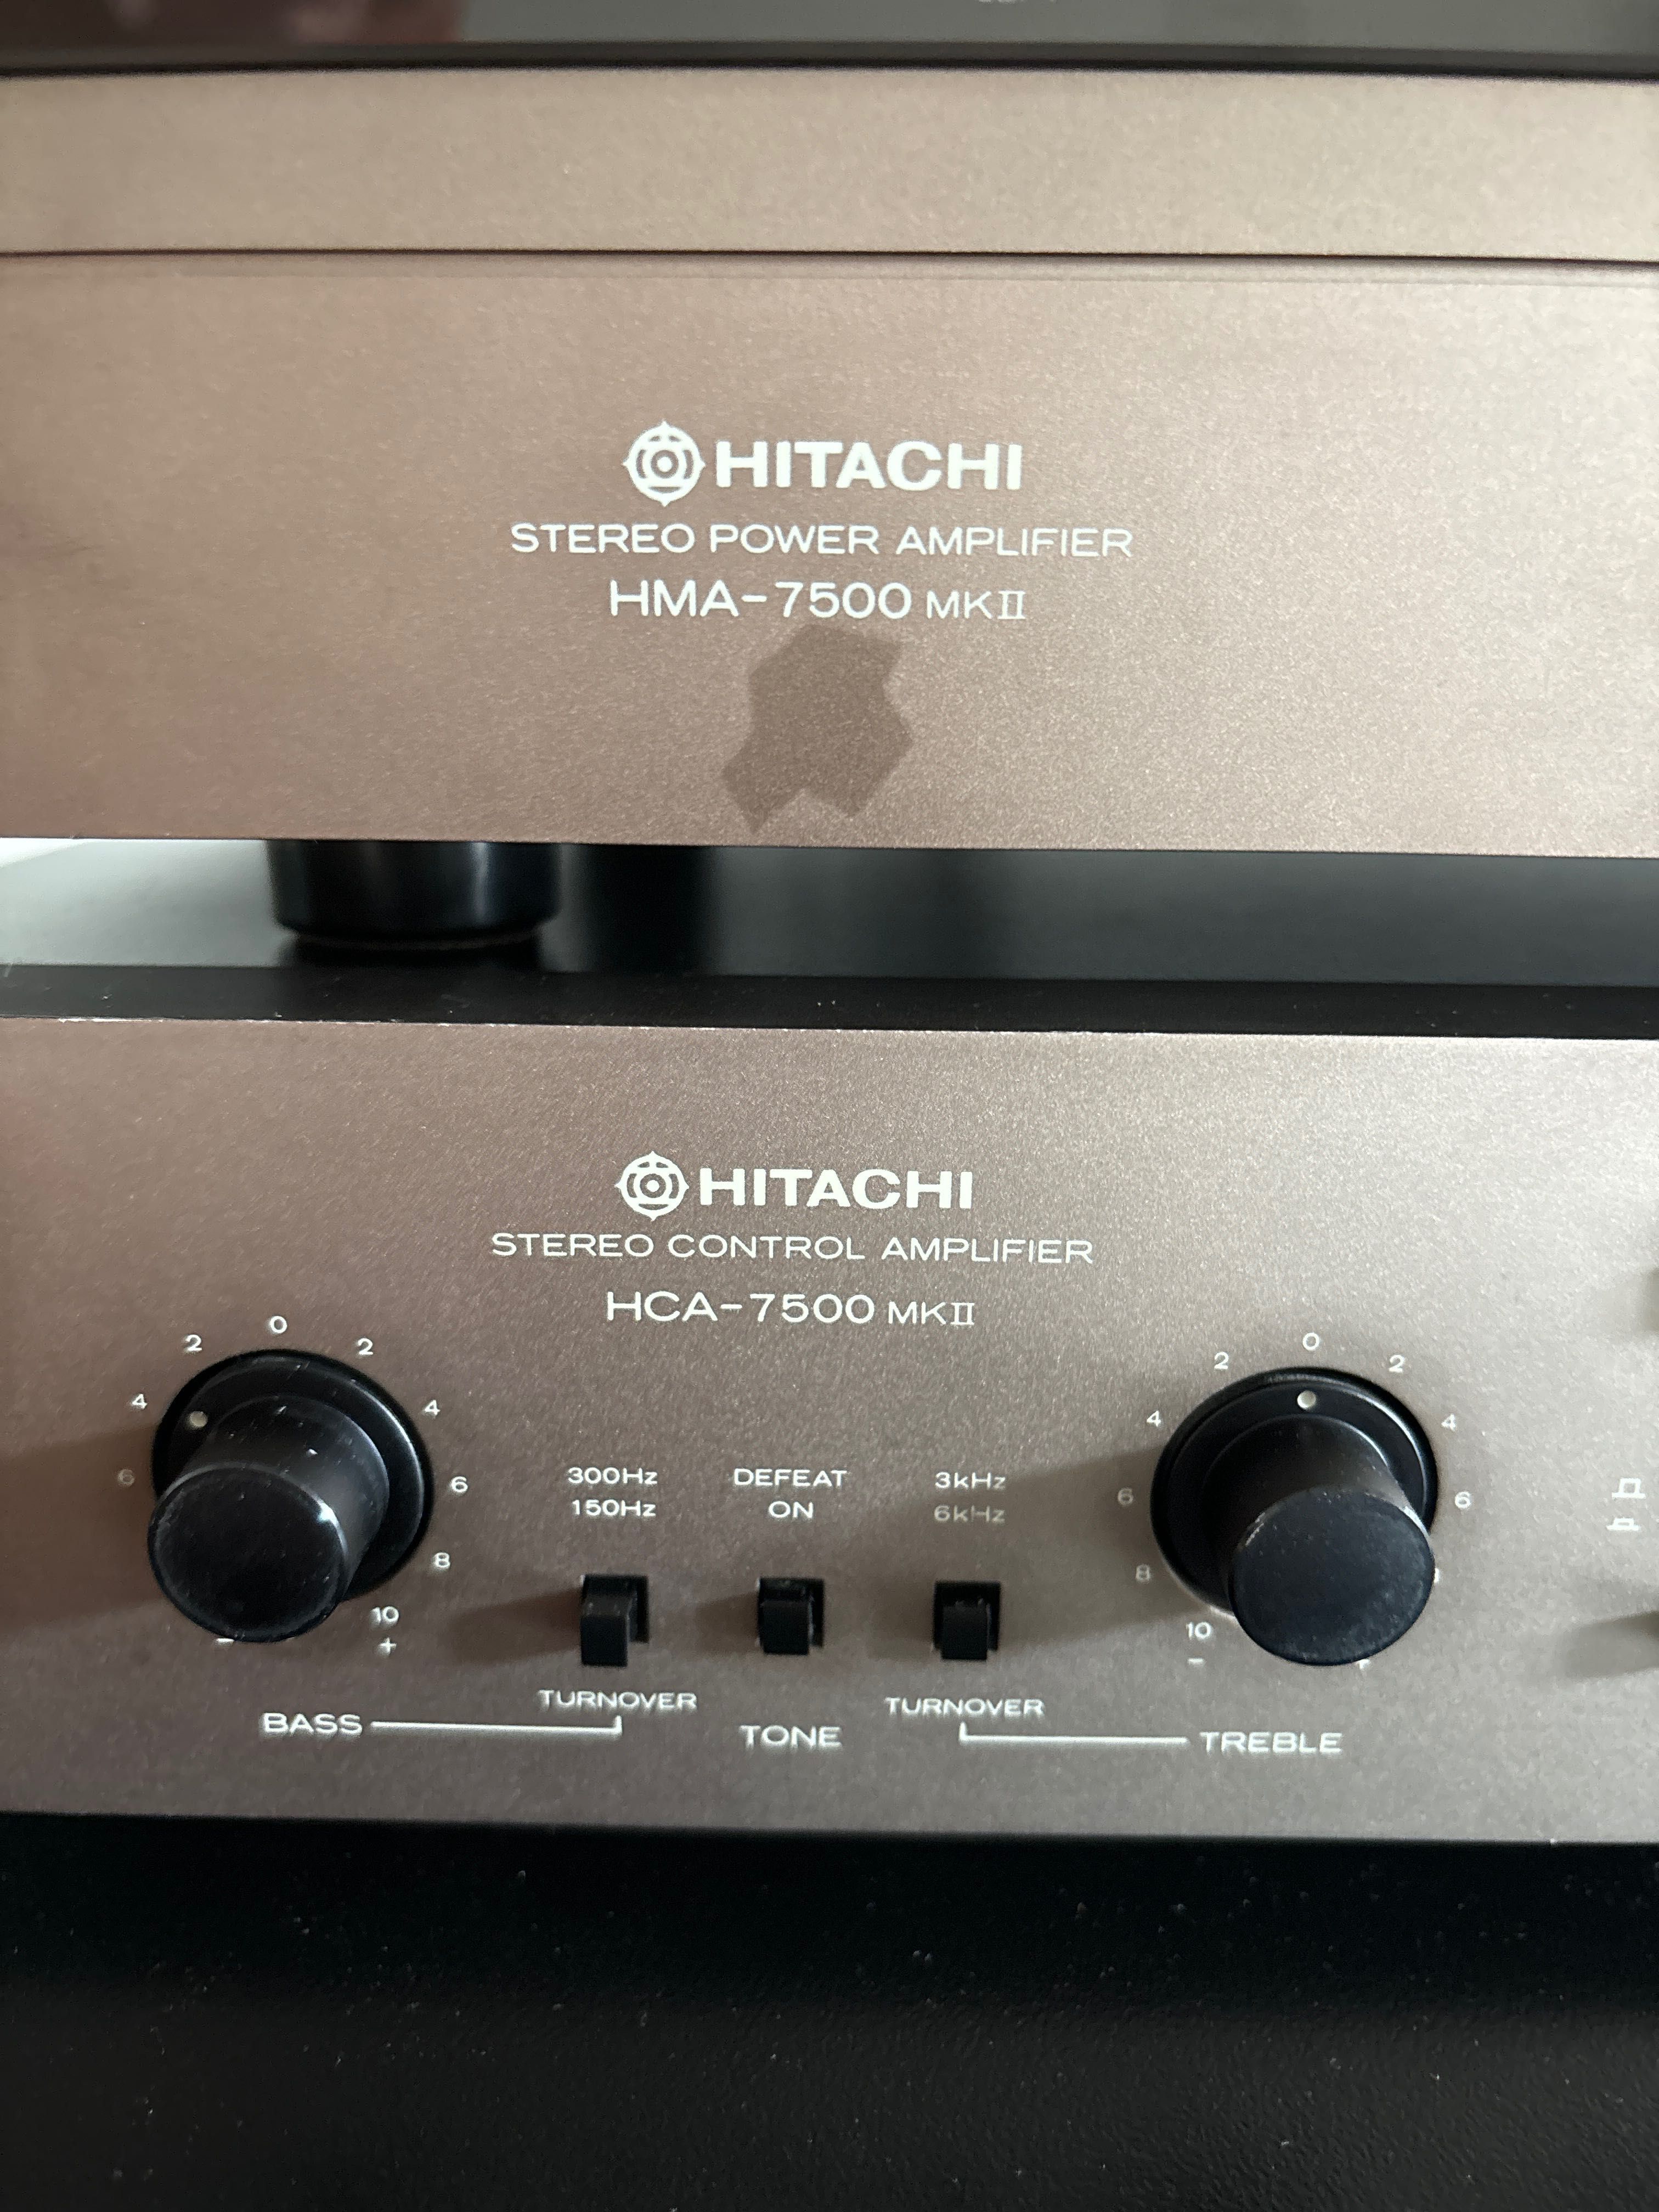 Hitachi HMA-7500 MKll i HCA-7500 MKll końcówka mocy pre ampli hi-fi